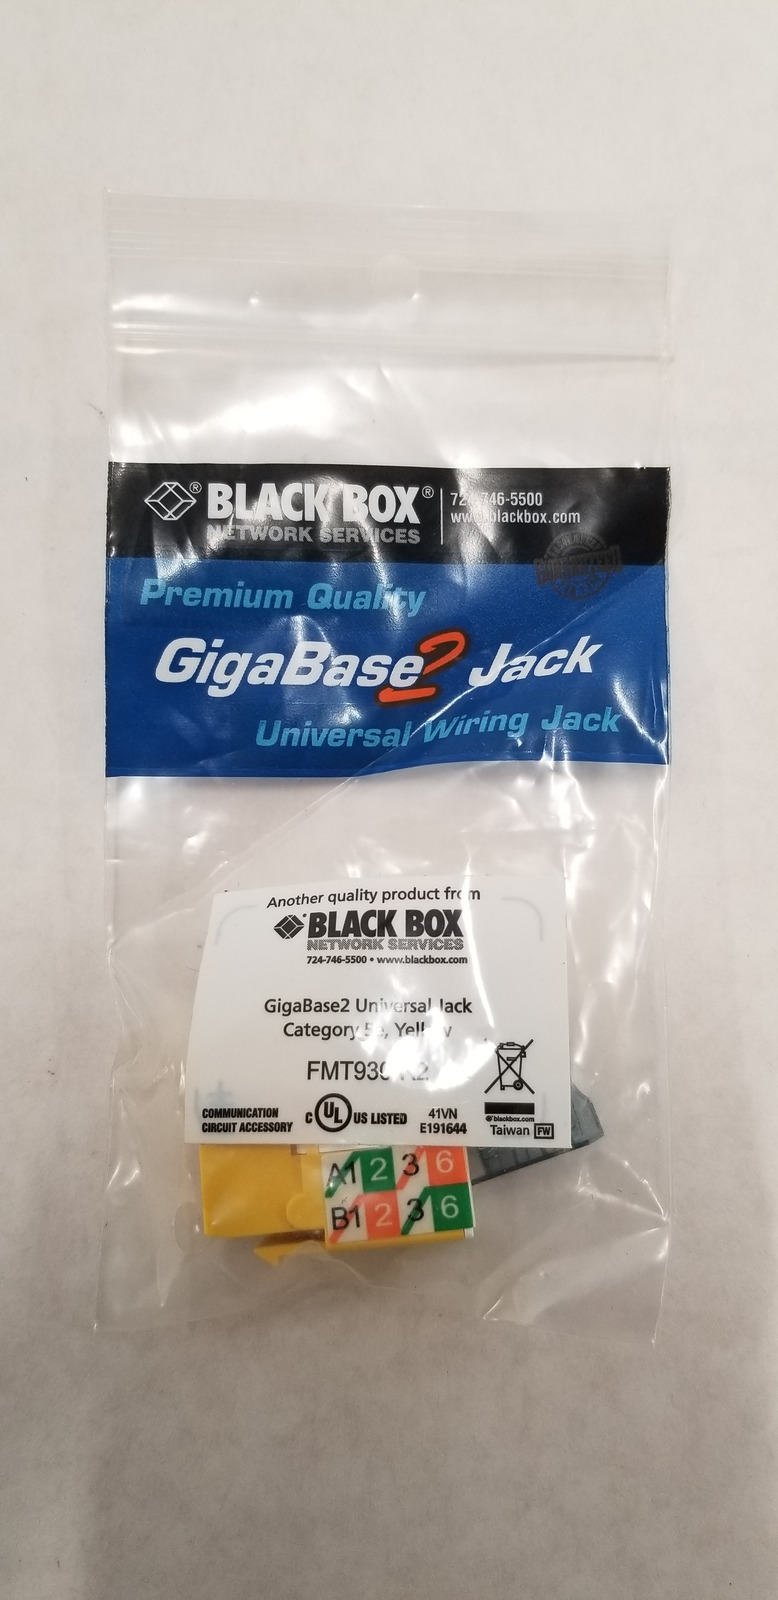 New Lot of 40 Black Box FMT930-R2 Gigabase2 Universal Jack Category 5e Yellow